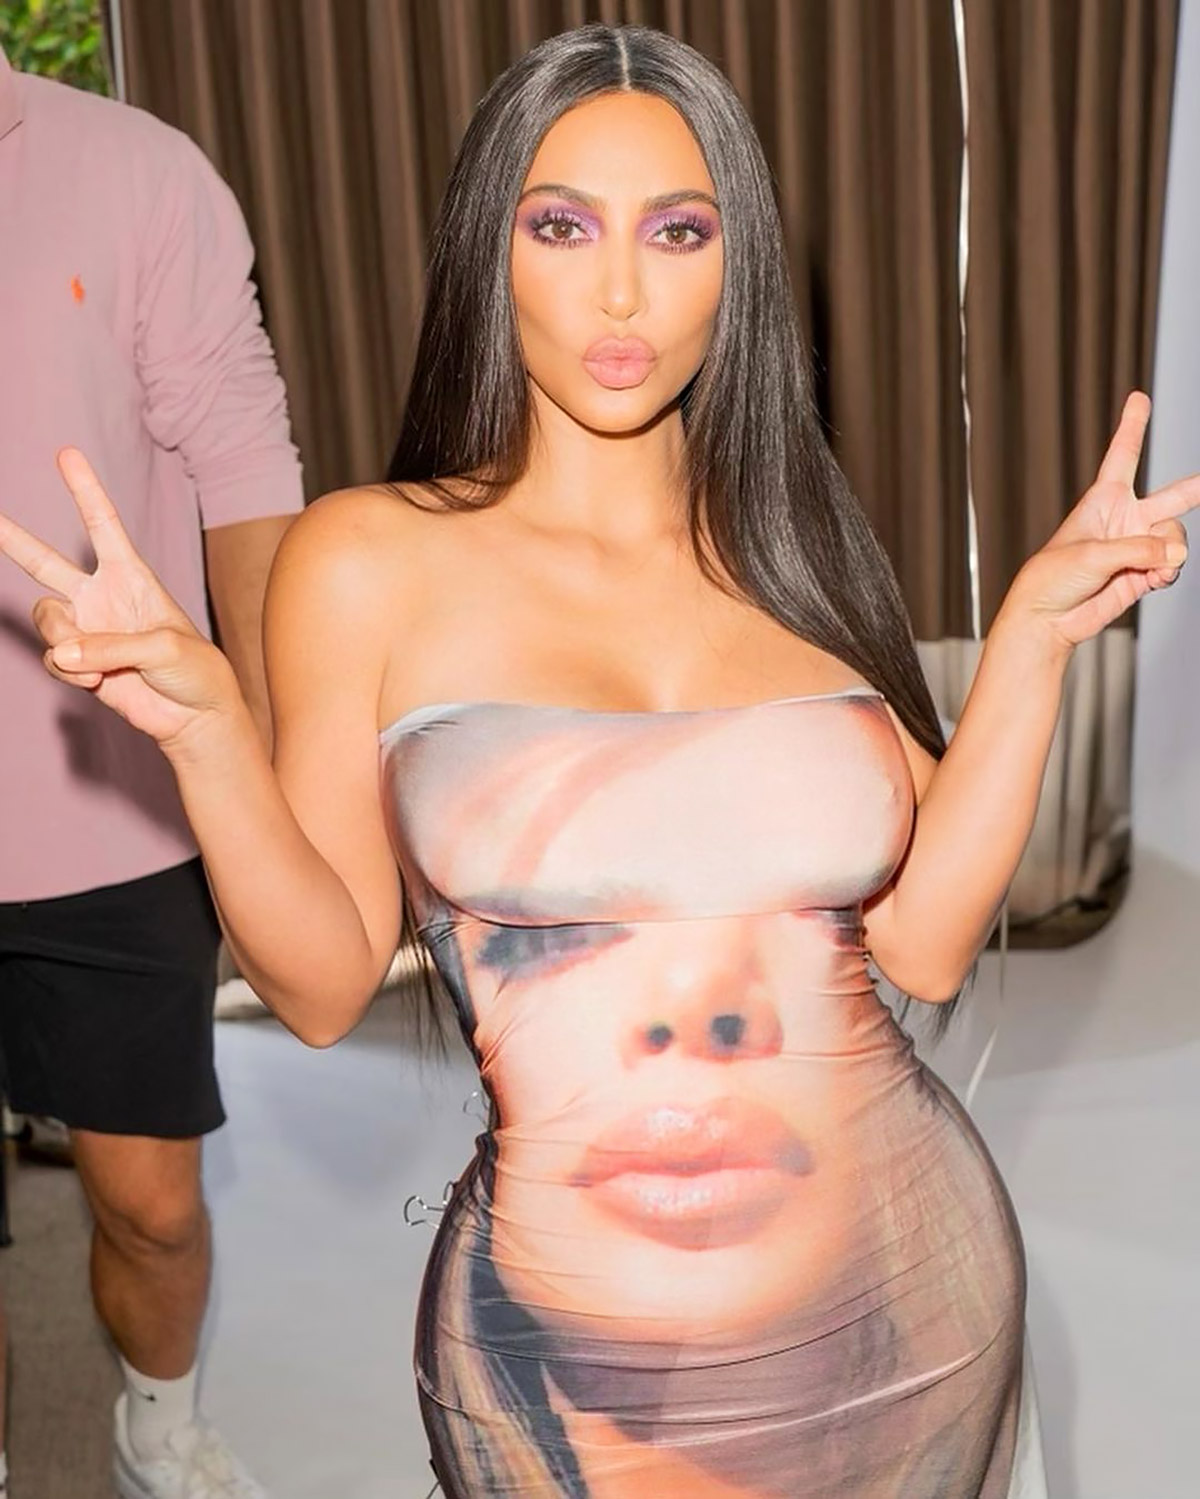 Kim Kardashian Shemale Bodybuilder - Kim Kardashian Wears a Dress With Her Face on It for KKW Beauty Shoot